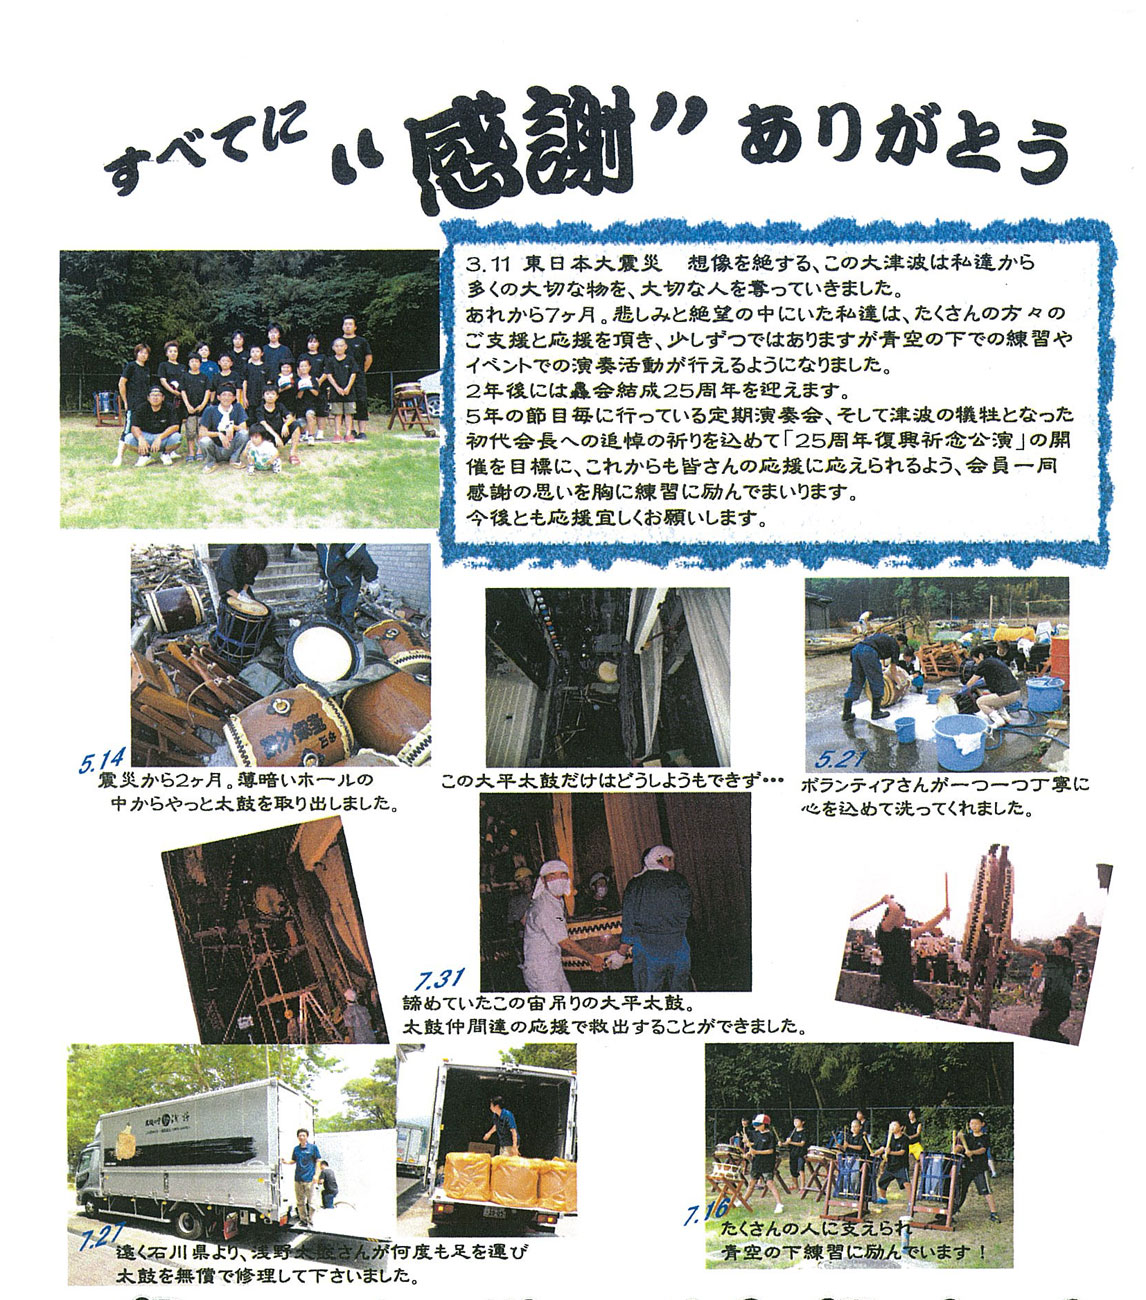 http://www.asano.jp/network/1108.2011.1.jpg